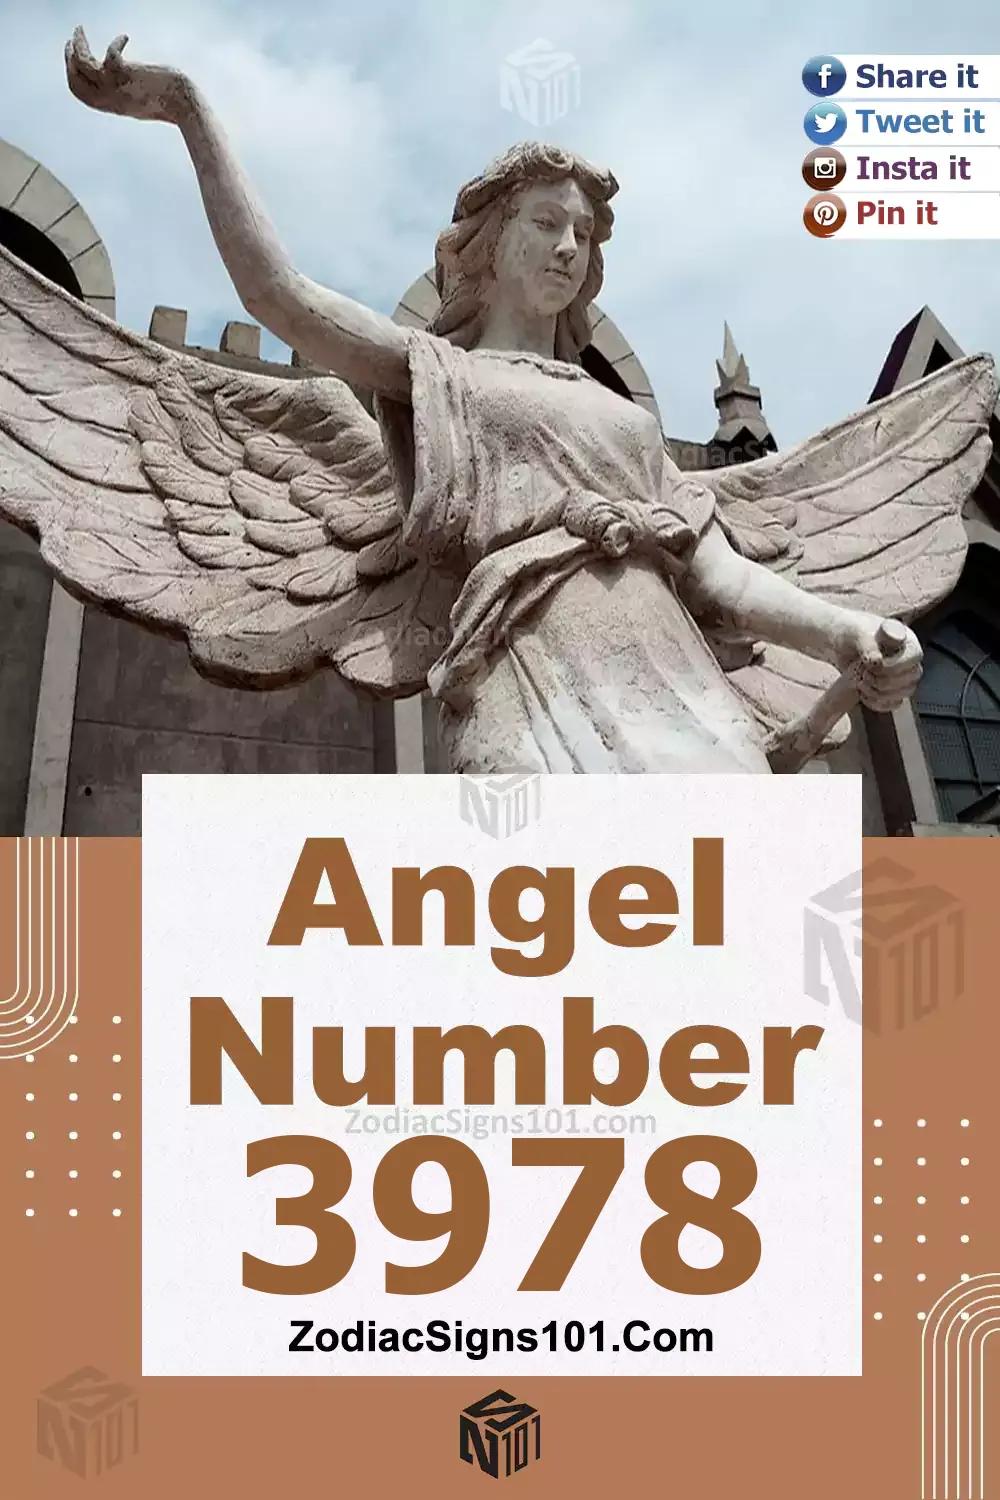 3978-Angel-Number-Meaning.jpg